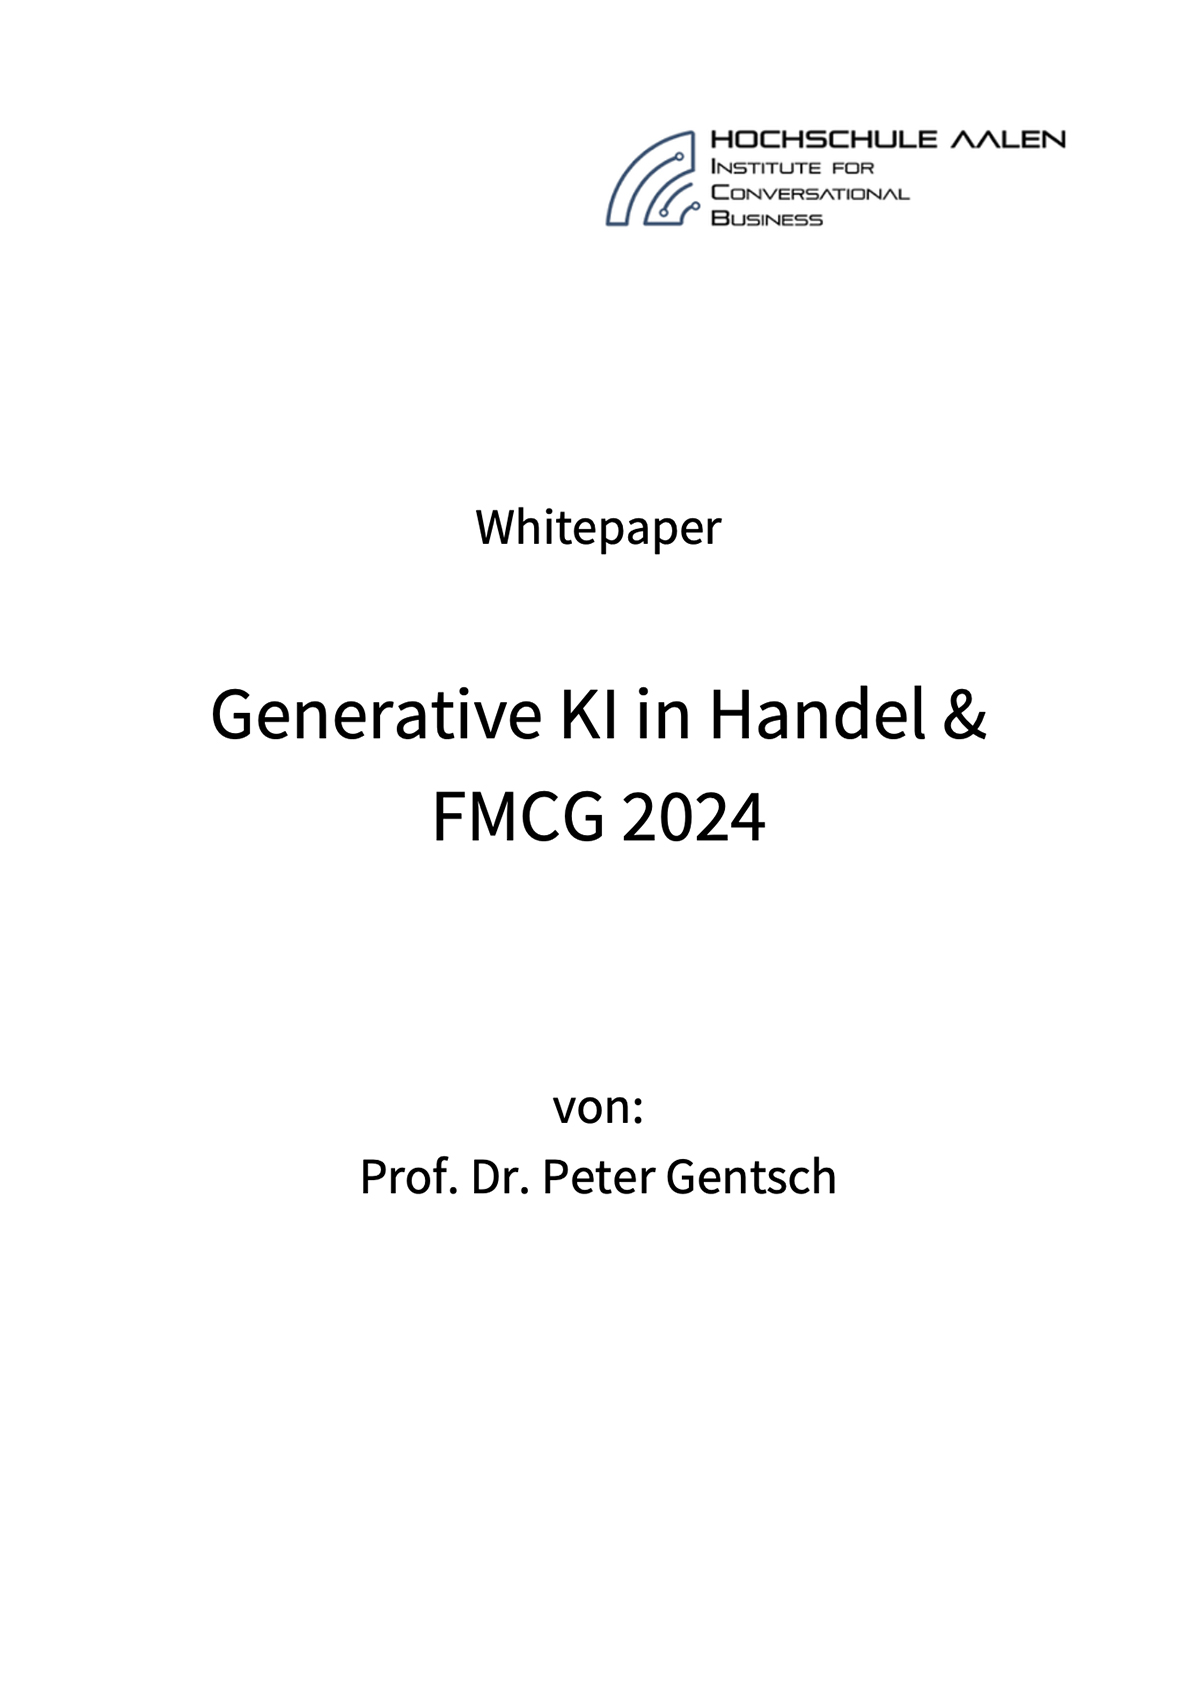 Whitepaper Generative KI in Handel und FMCG 2024